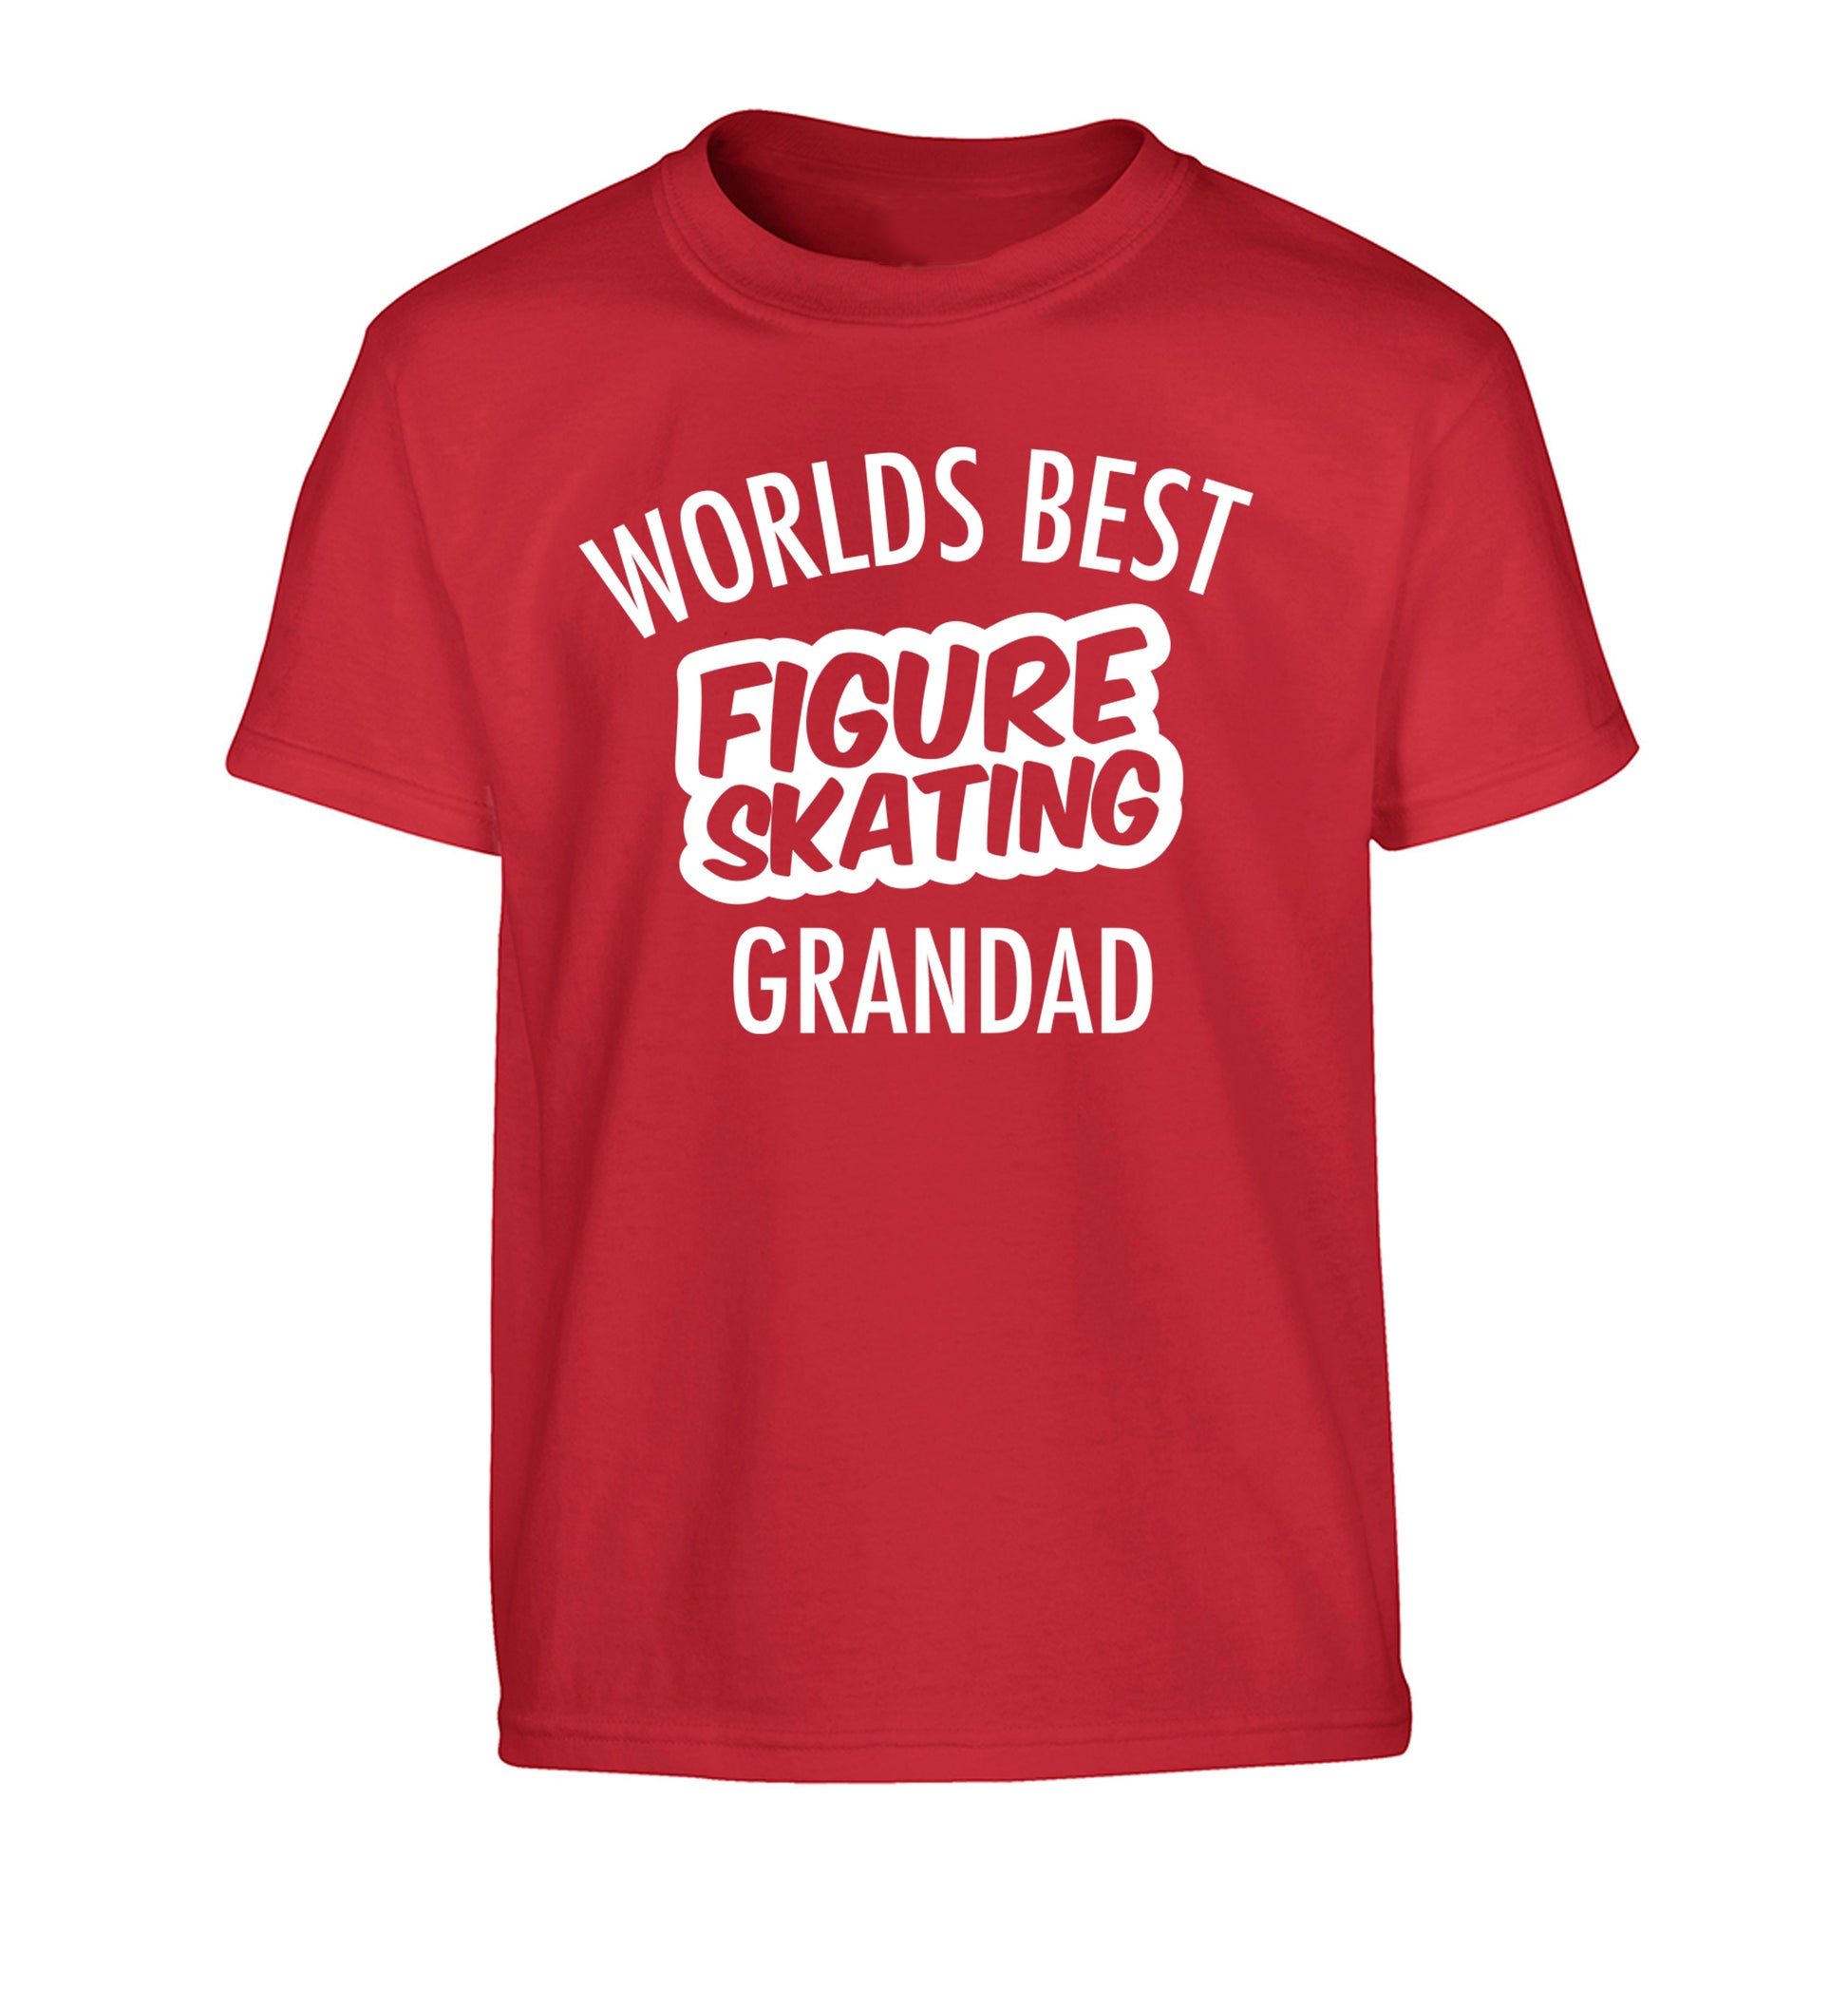 Worlds best figure skating grandad Children's red Tshirt 12-14 Years